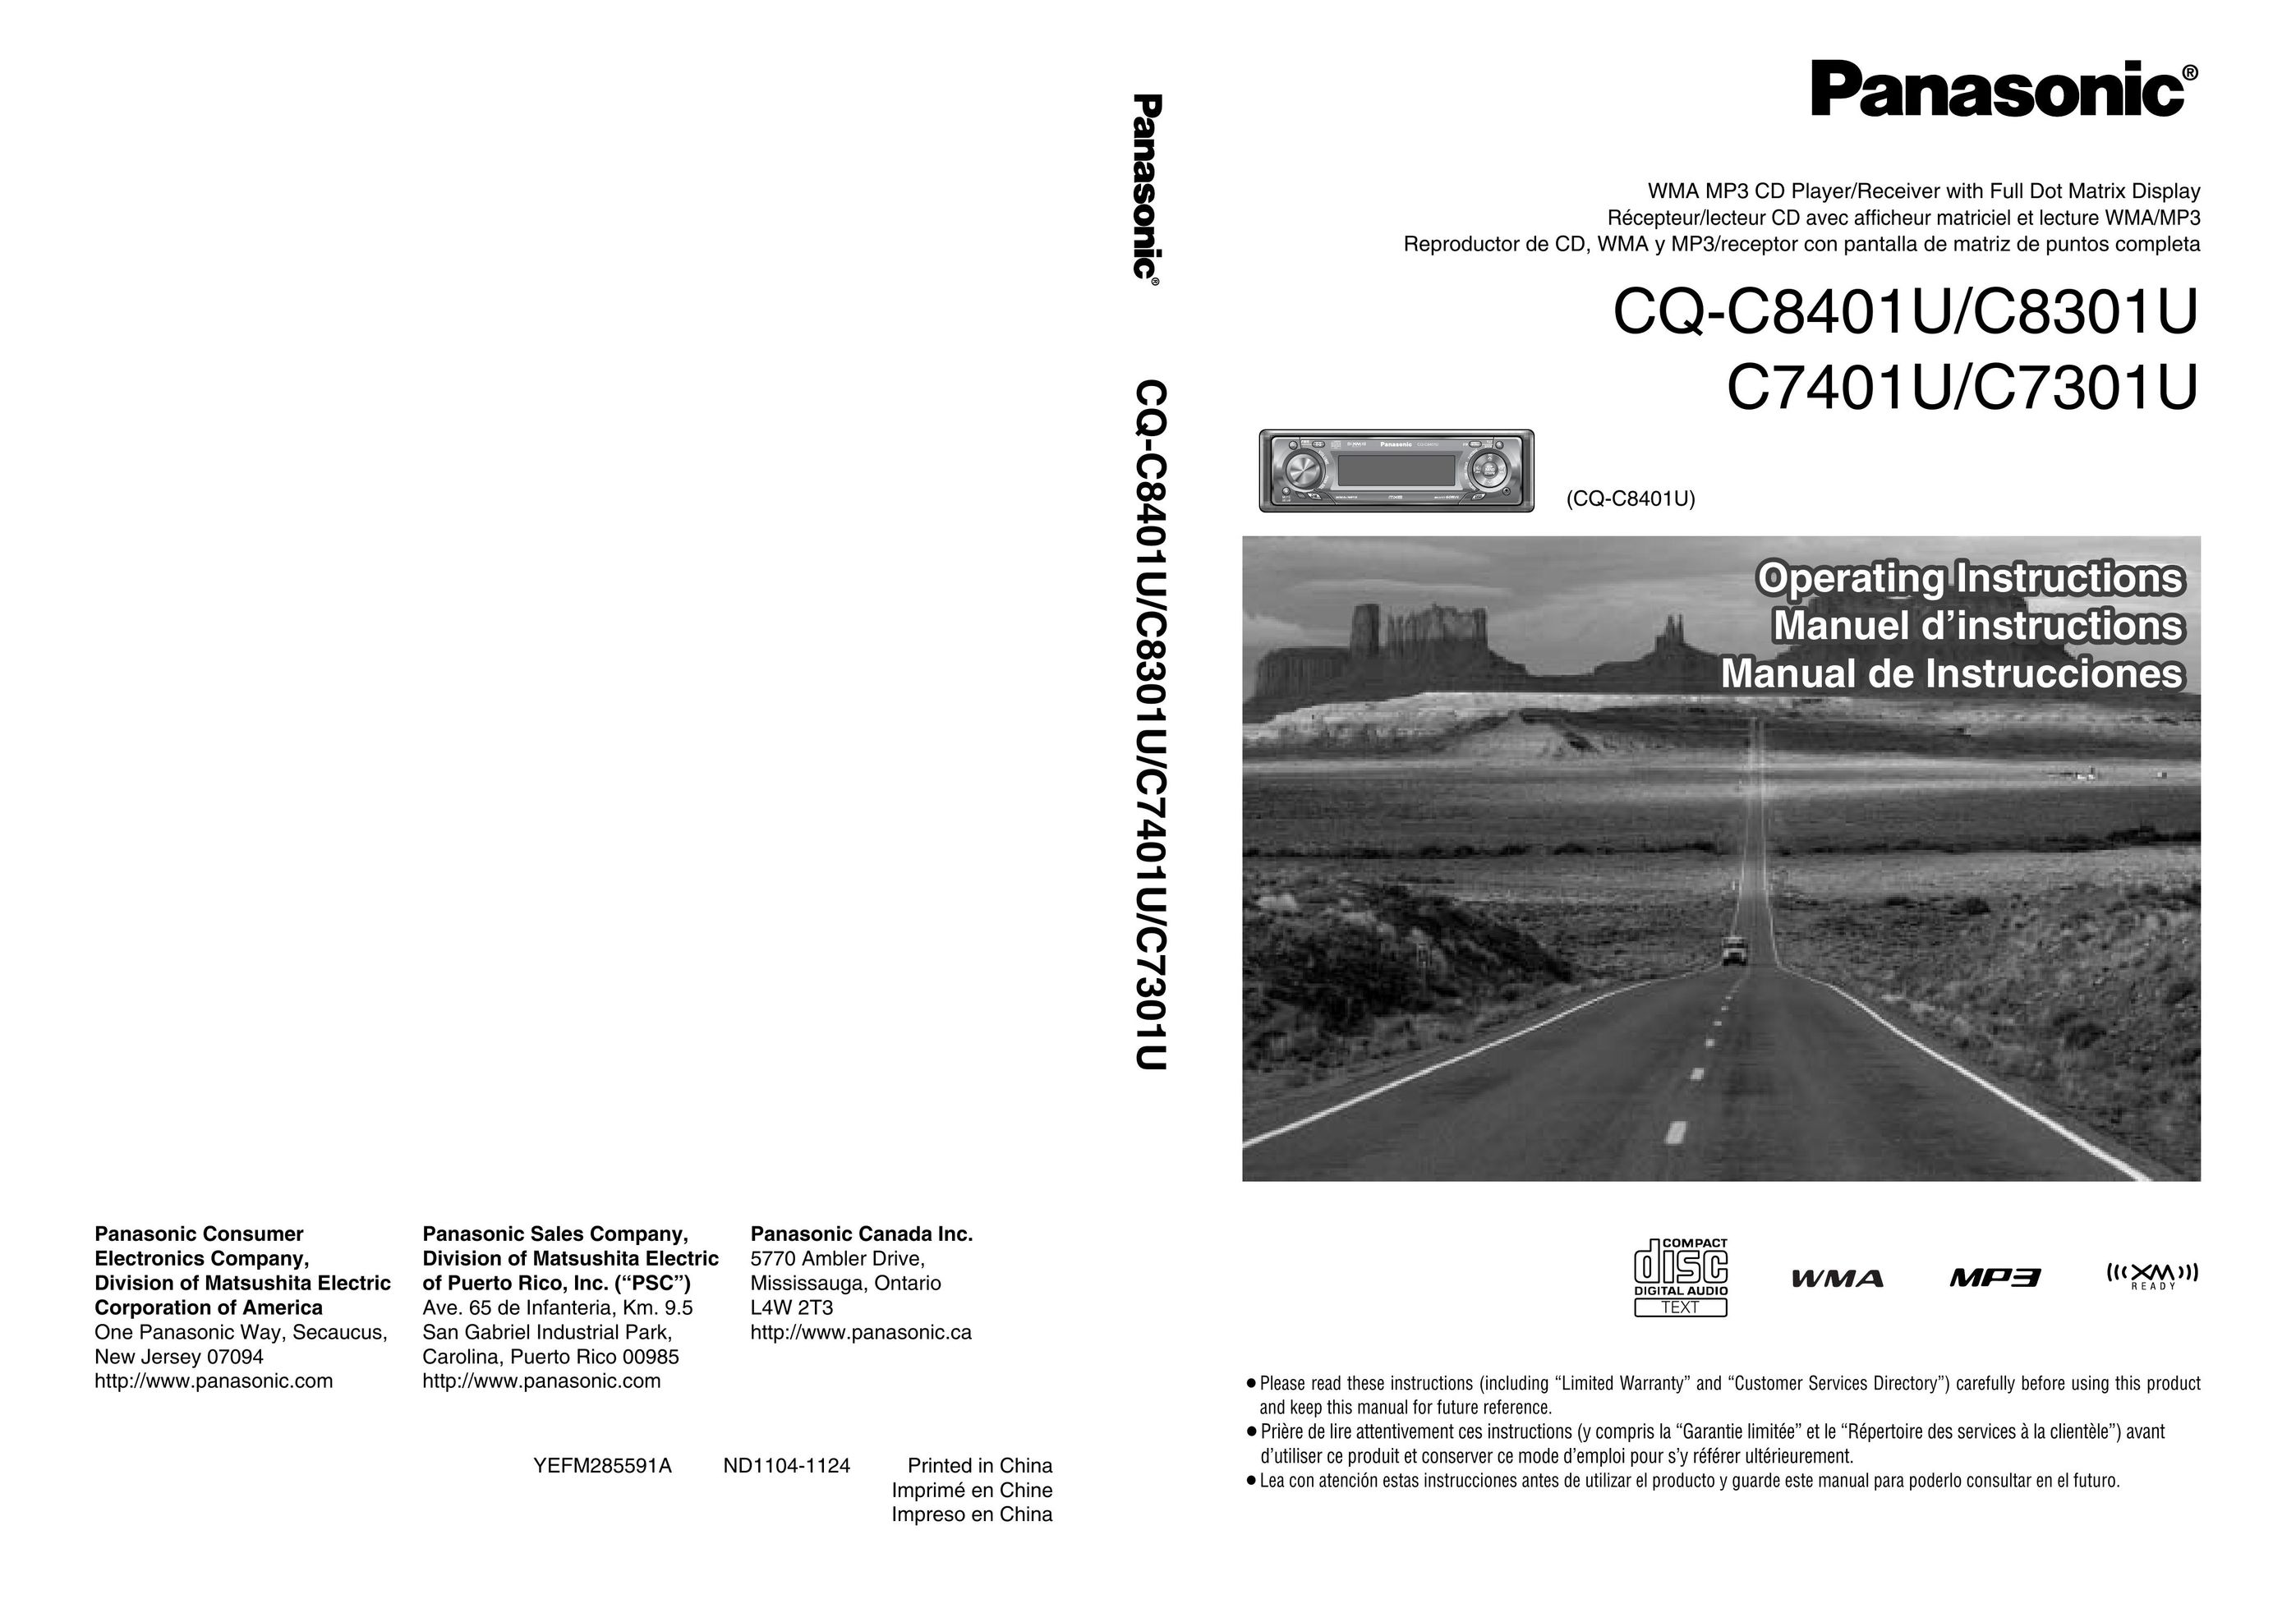 Panasonic C7401U Car Stereo System User Manual